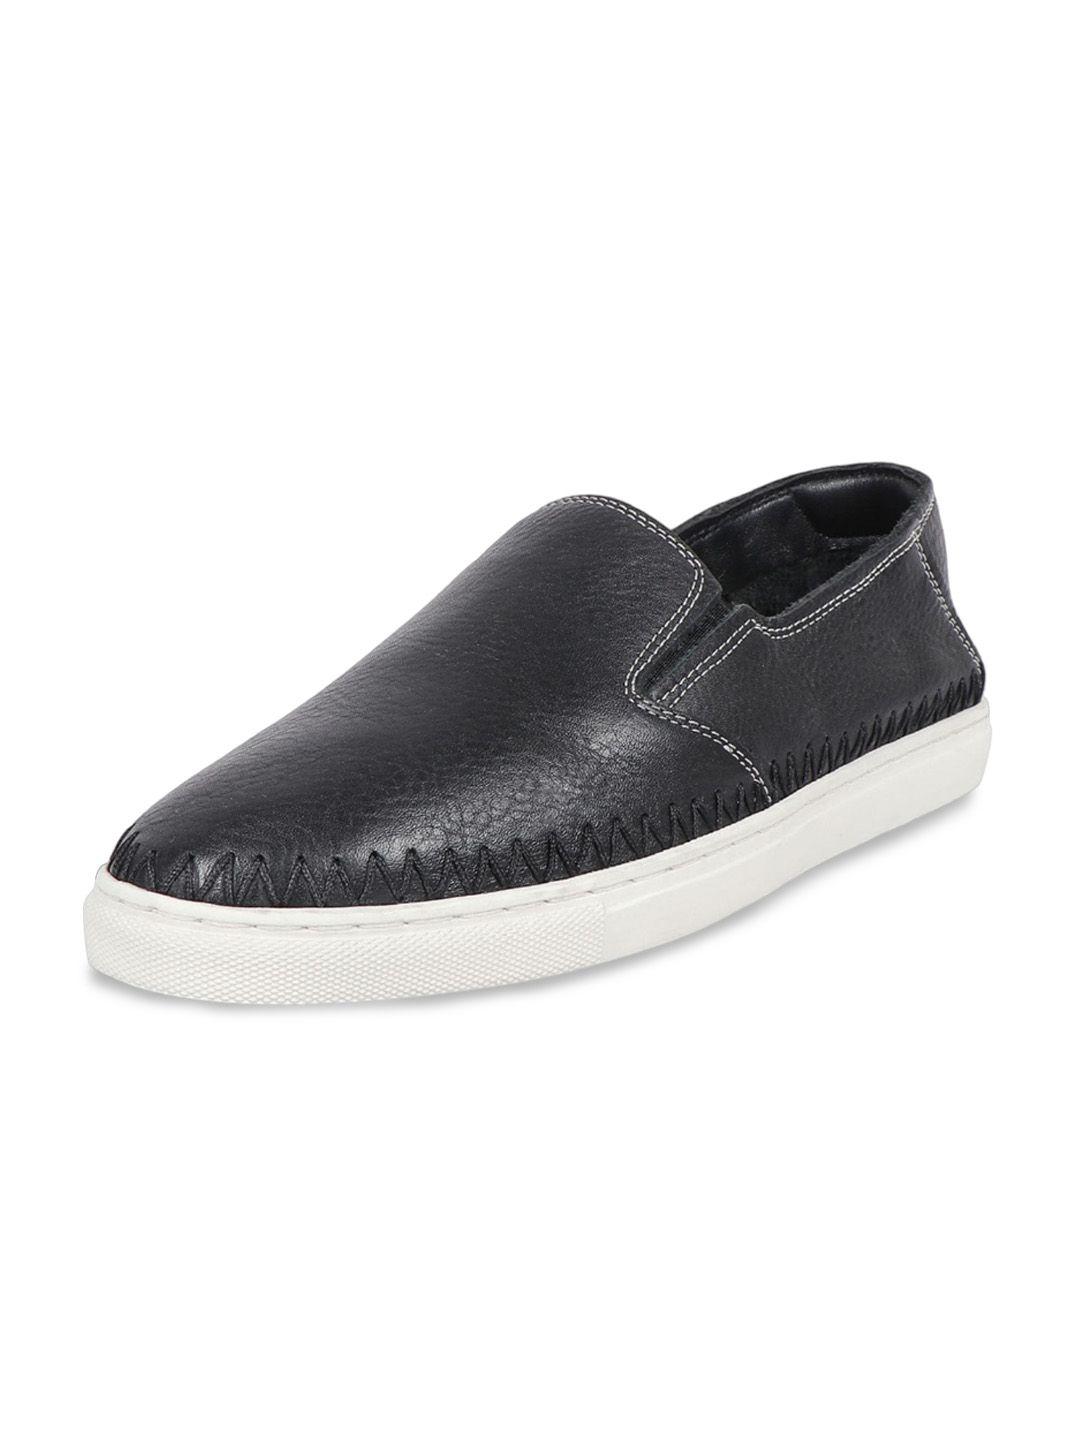 hidesign men black perforations leather slip-on sneakers